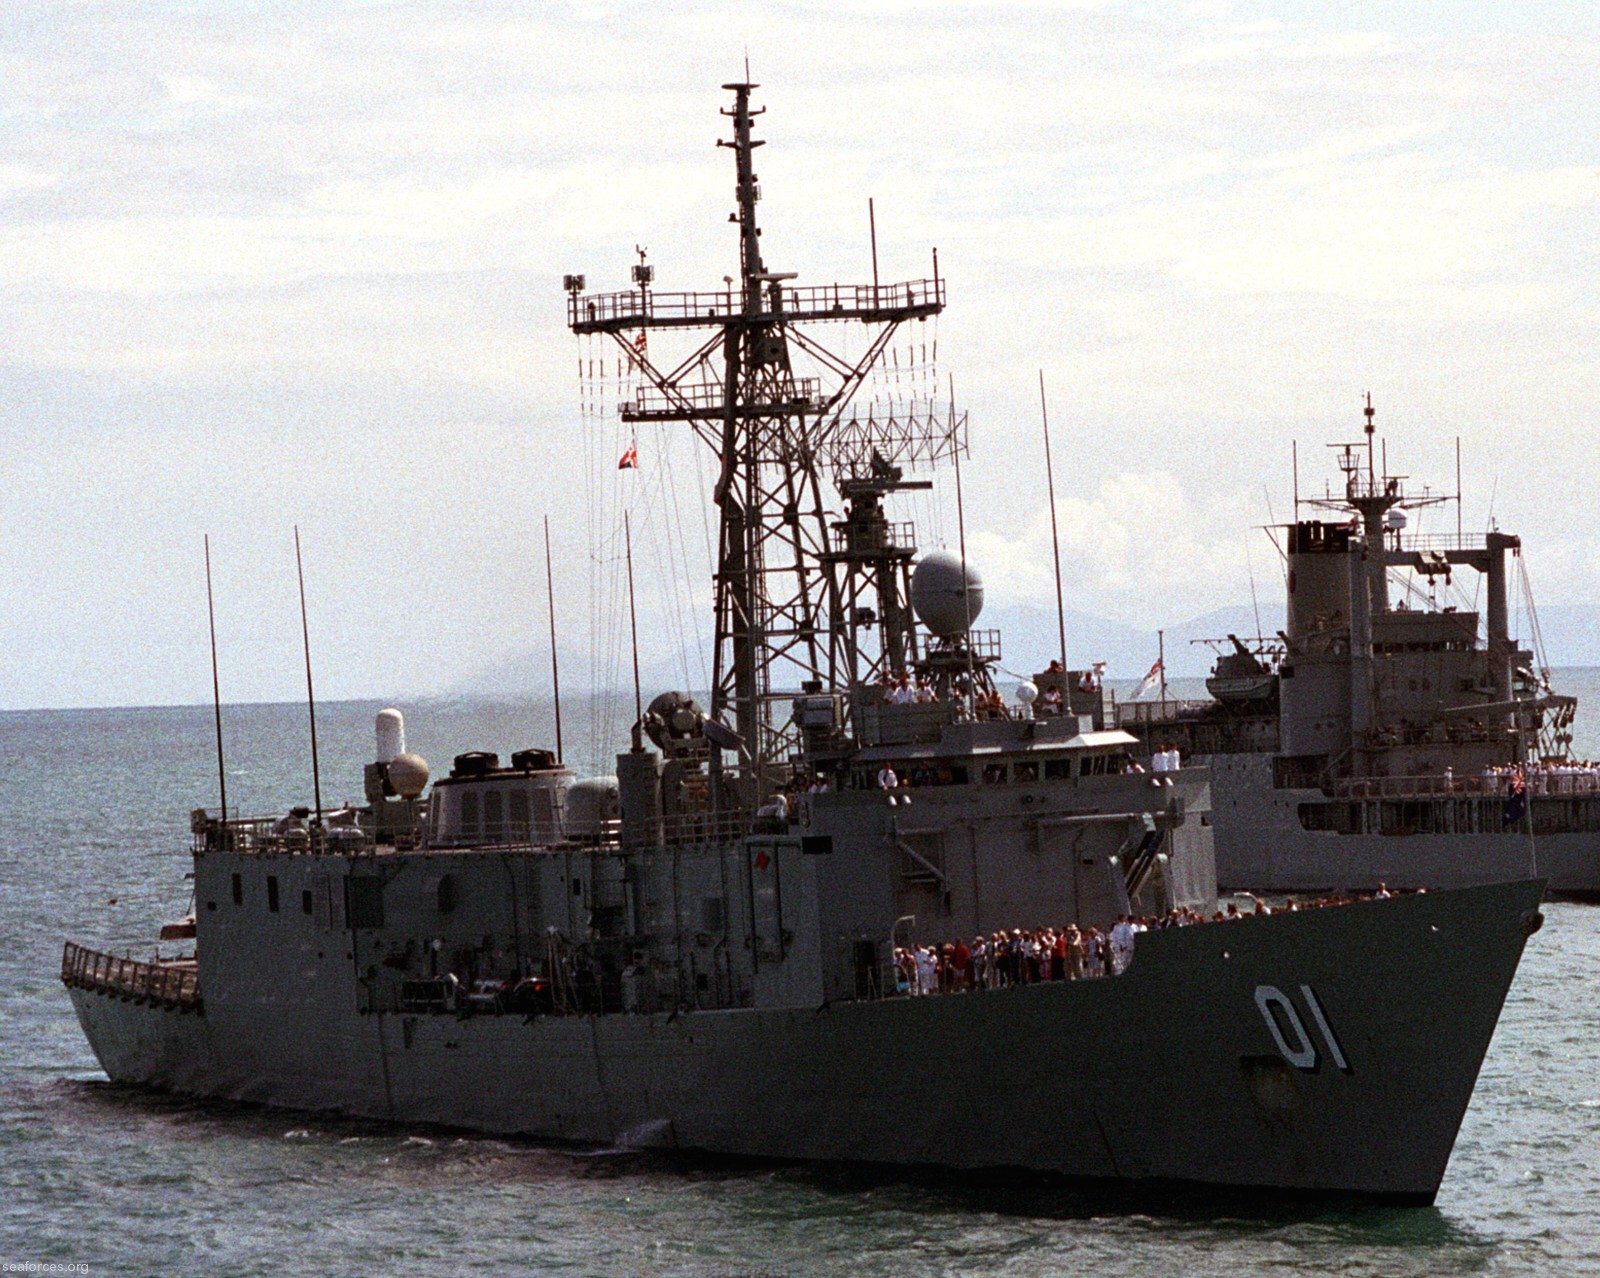 ffg-01 hmas adelaide guided missile frigate royal australian navy 1992 07 battle of coral sea